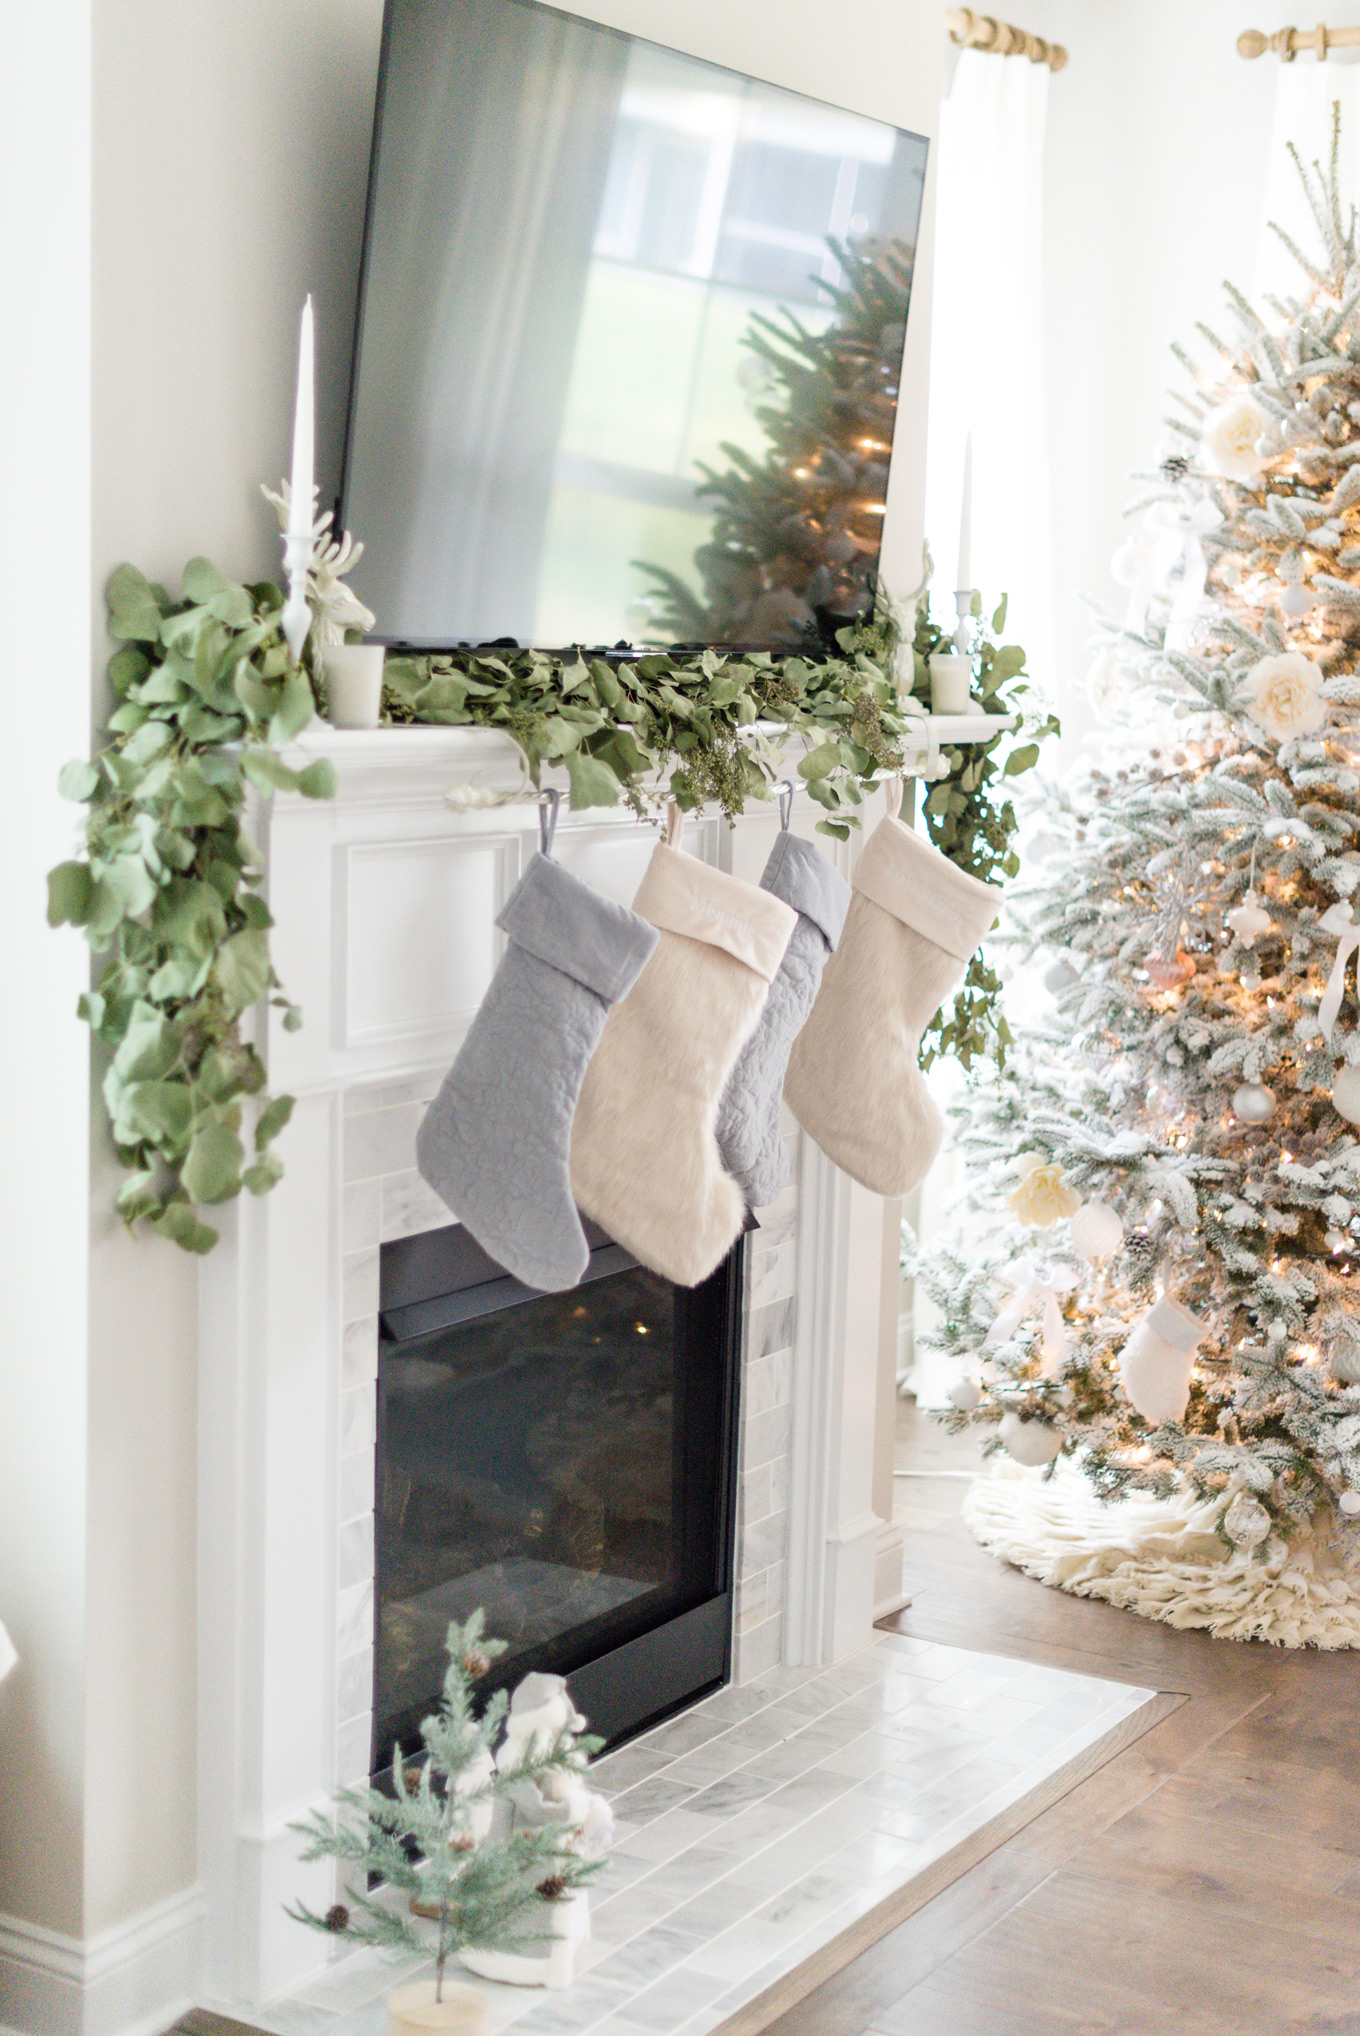 Holiday Design | Lifestyle Blogger Elle Bowes shares holiday home decor ideas.